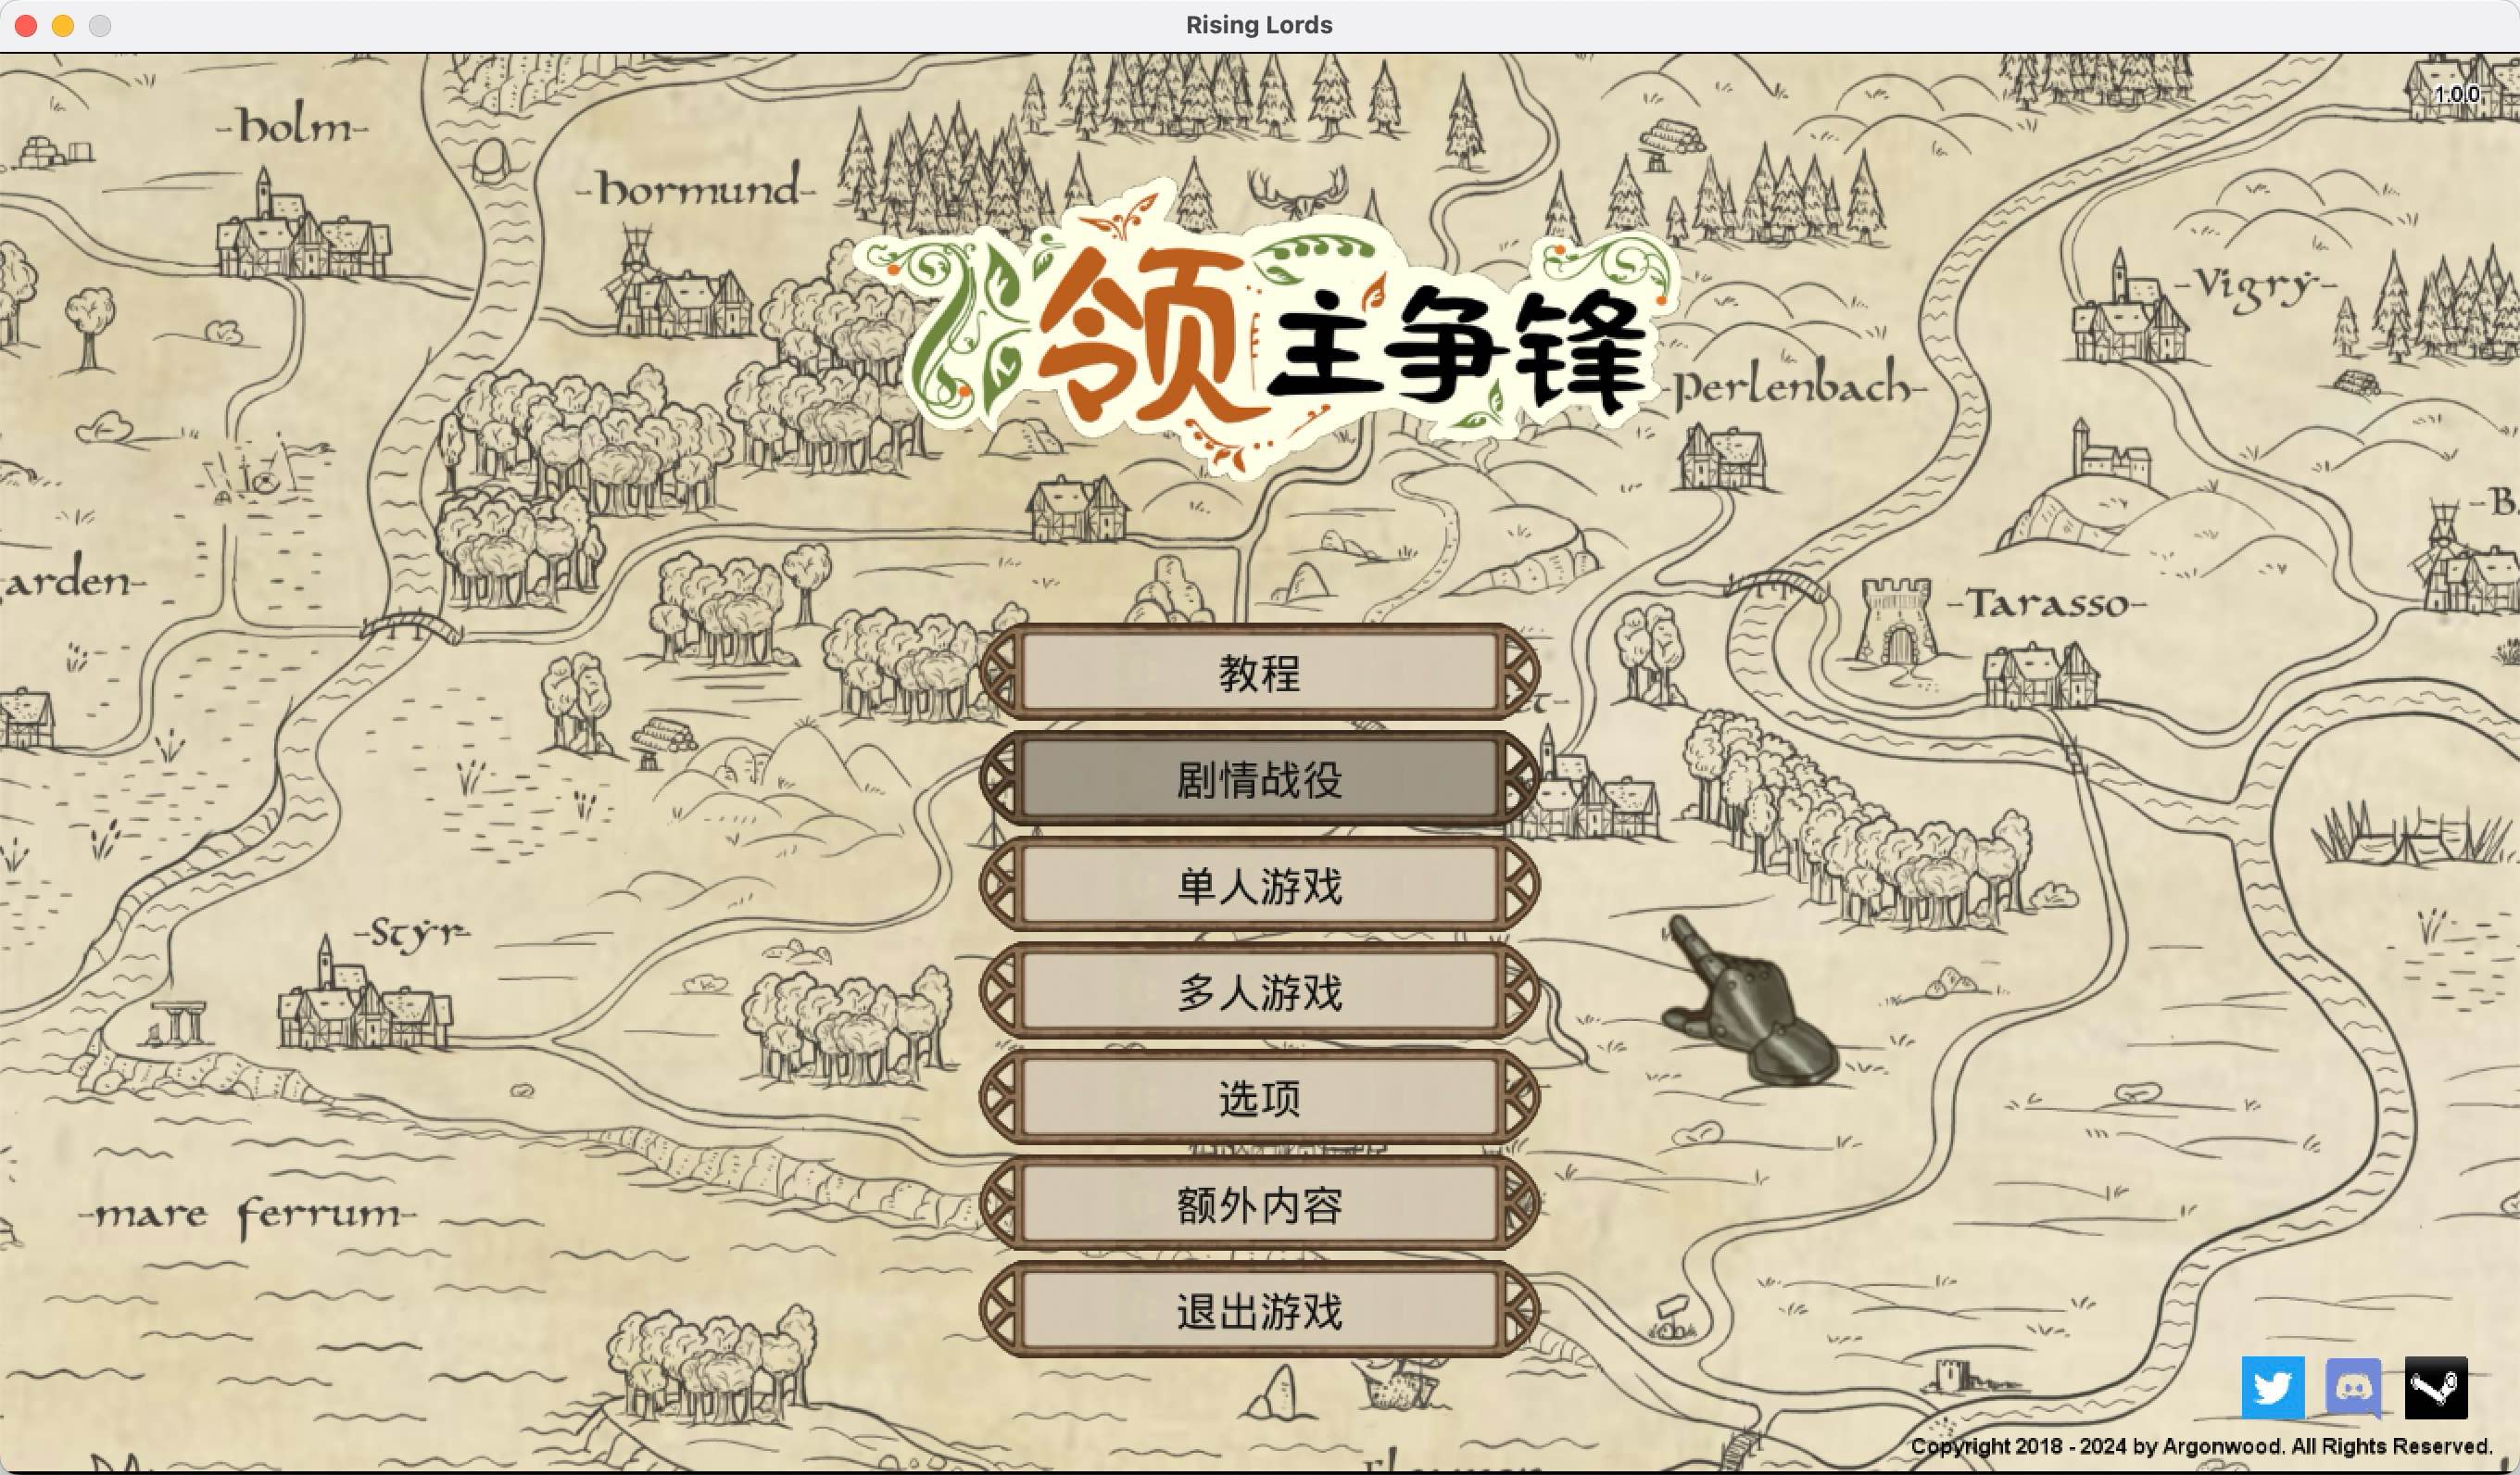 领主争锋 for Mac Rising Lords v1.0.1.488 中文移植版 苹果电脑